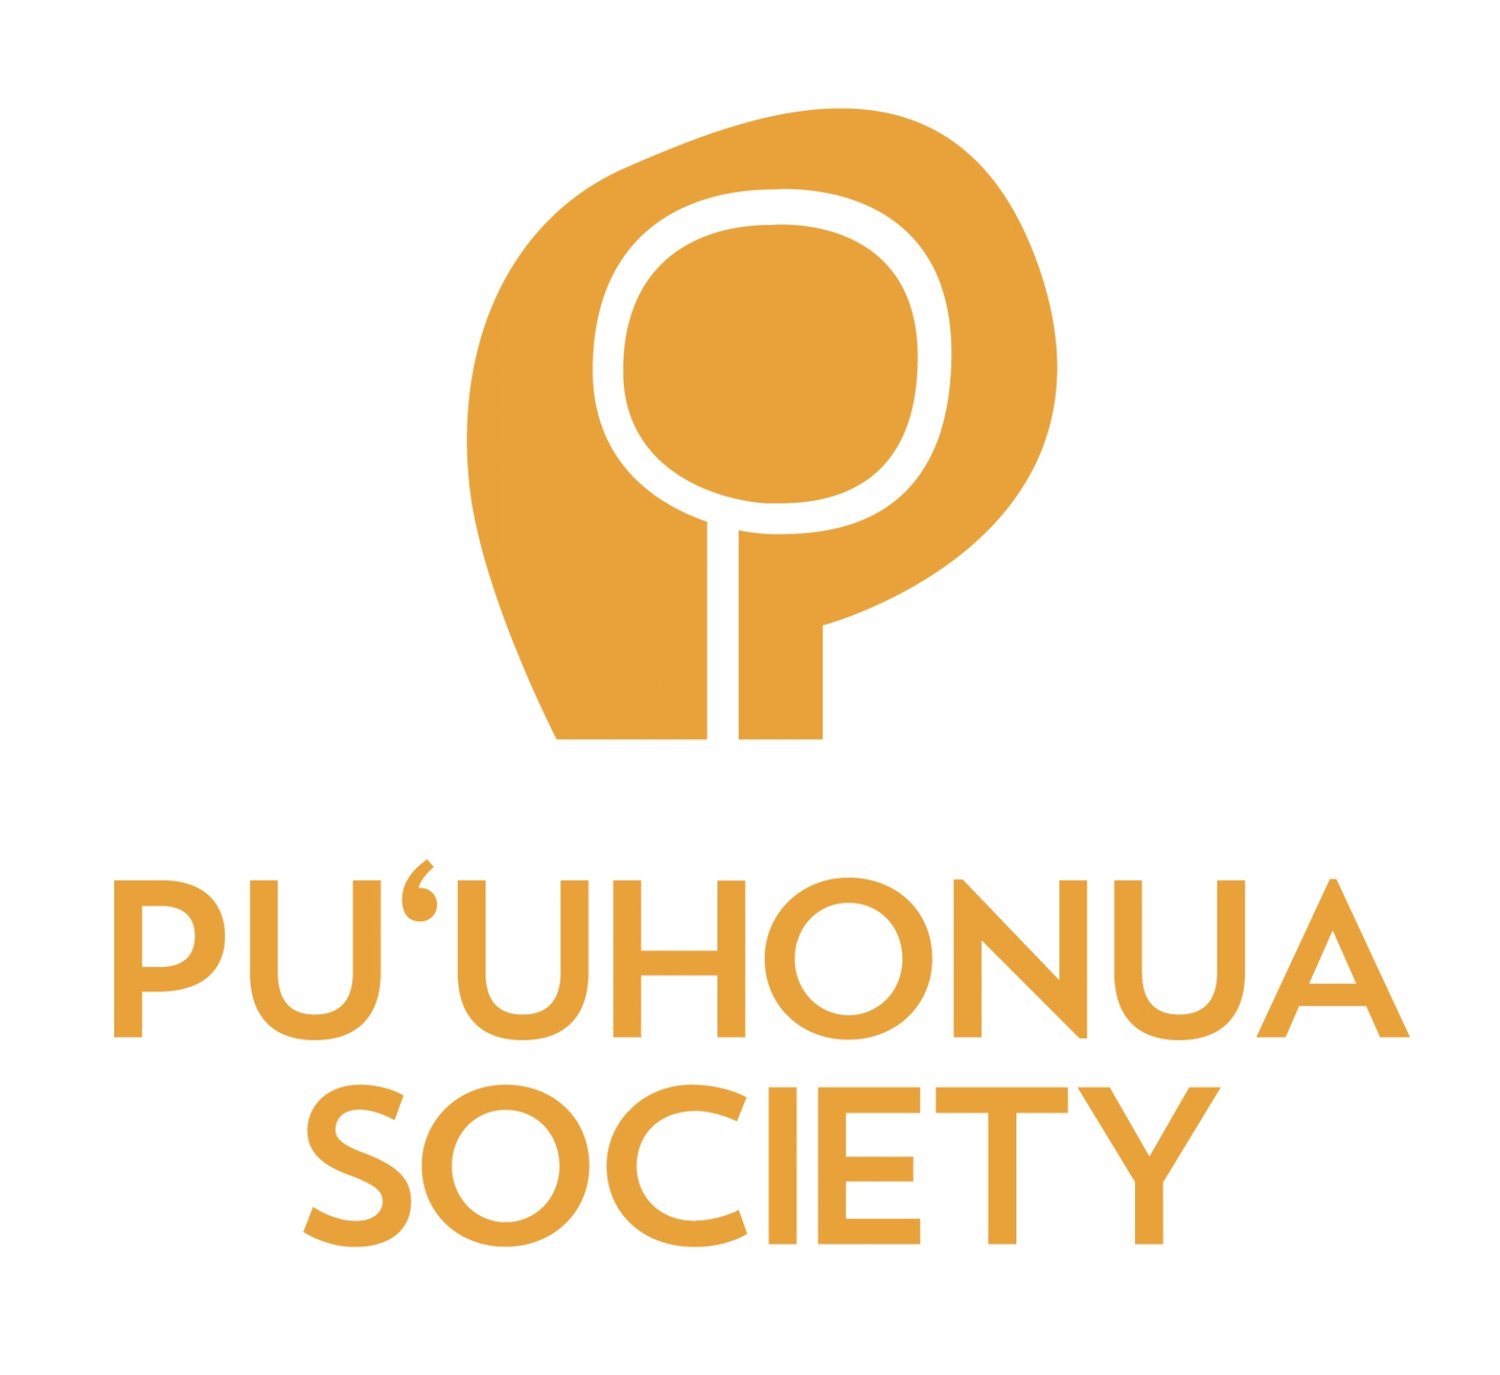 Pu'uhonua Society